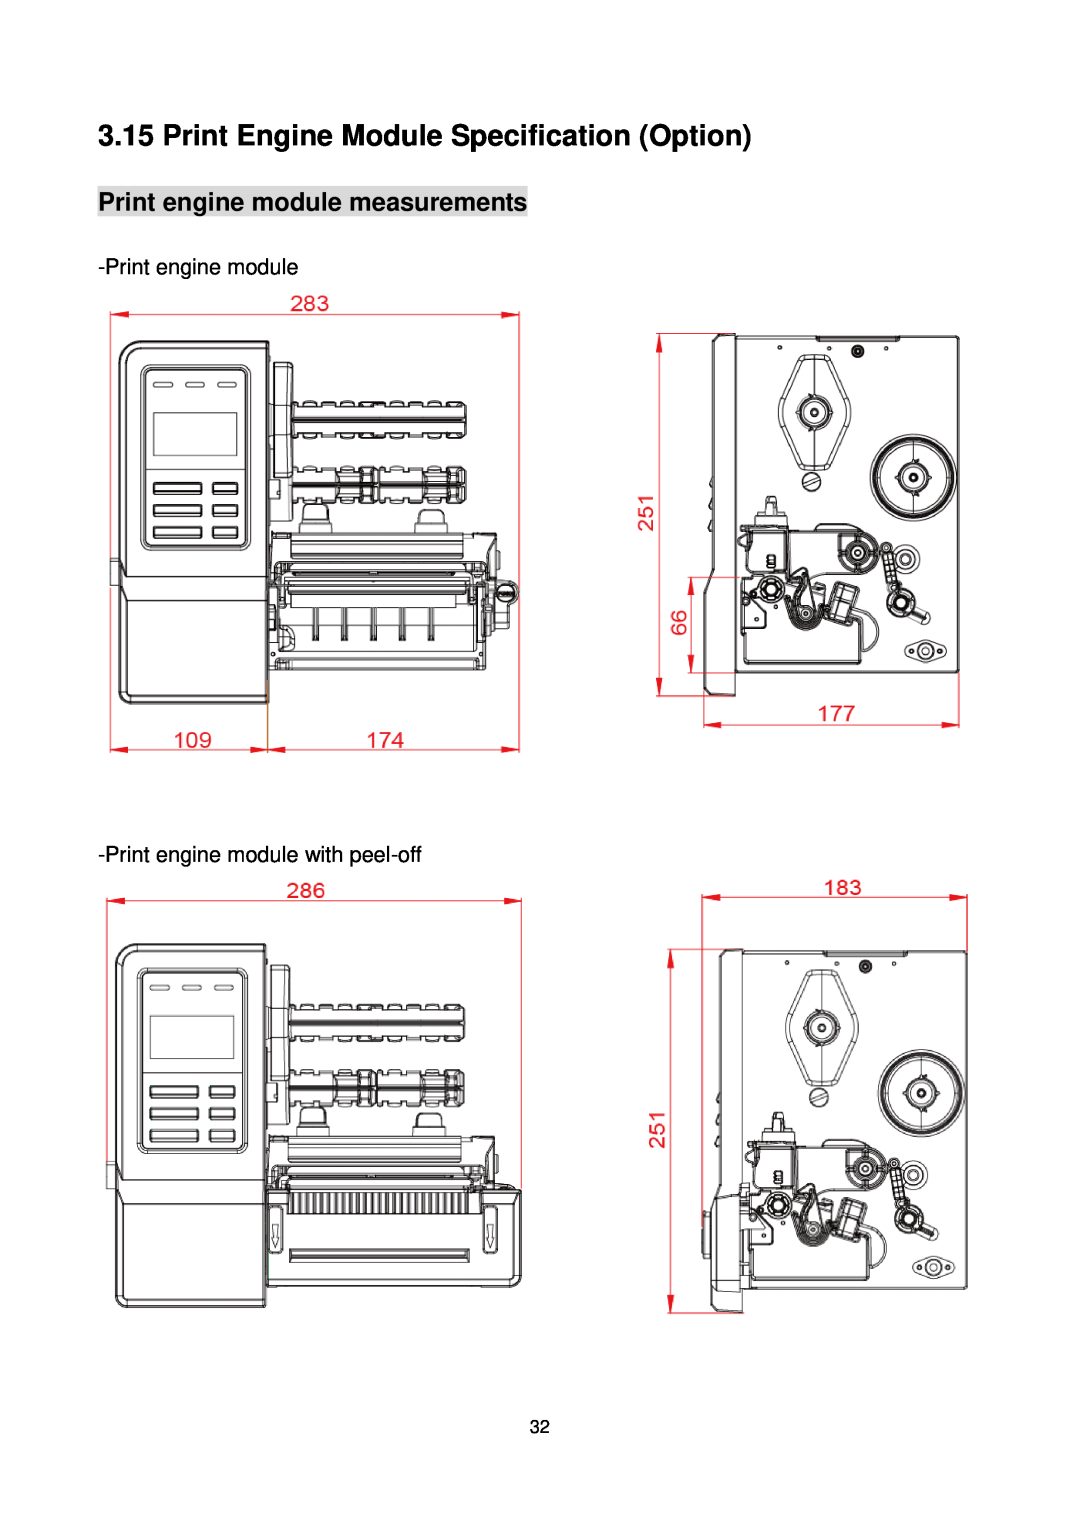 The Speaker Company me240 manual Print Engine Module Specification Option, Print engine module measurements 